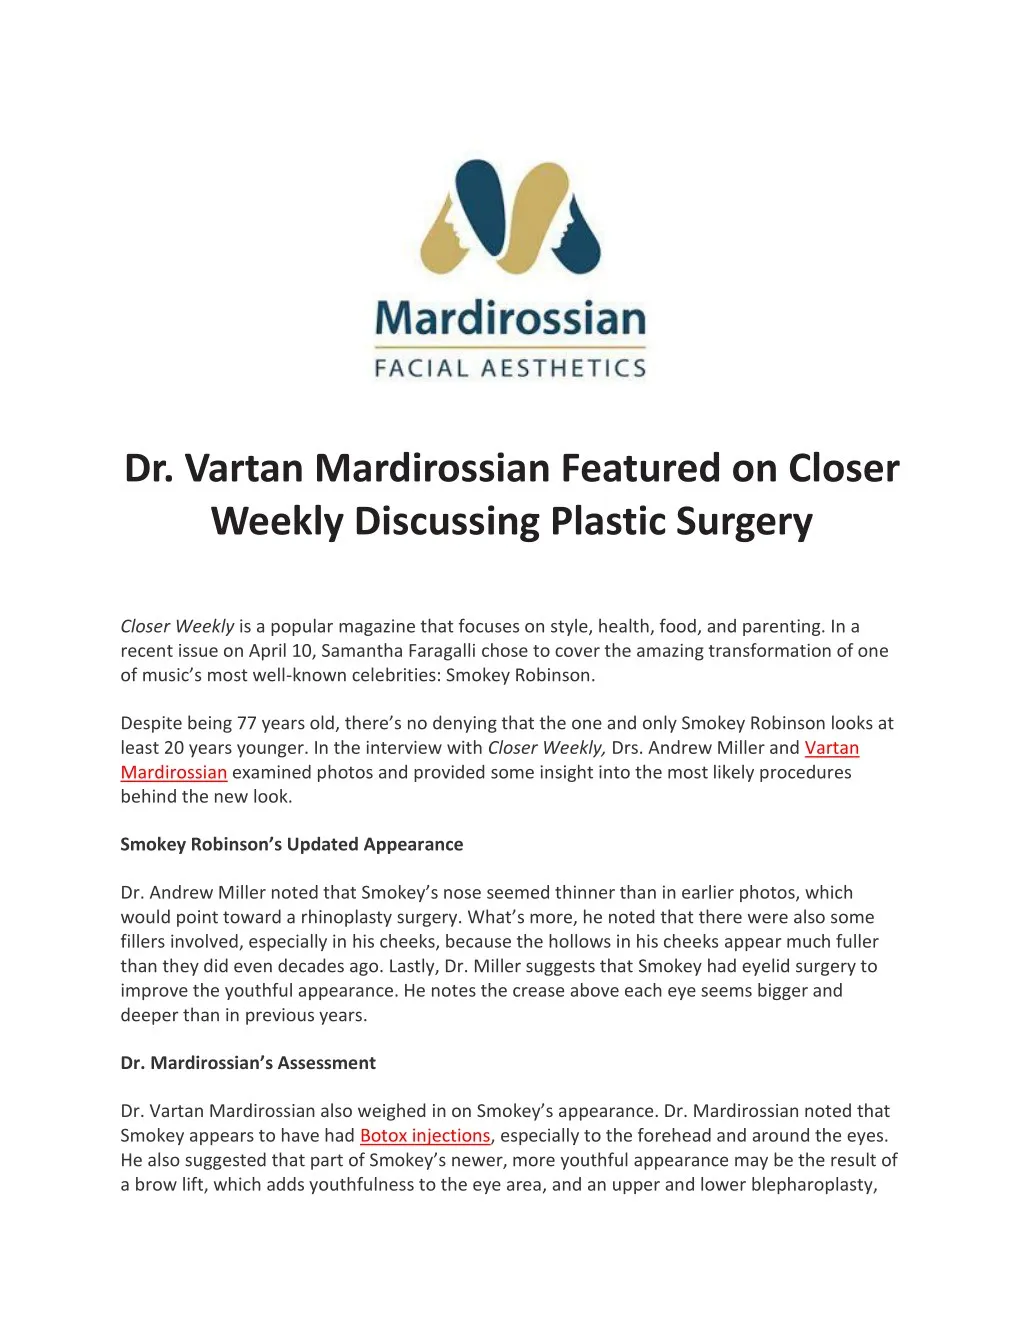 dr vartan mardirossian featured on closer weekly